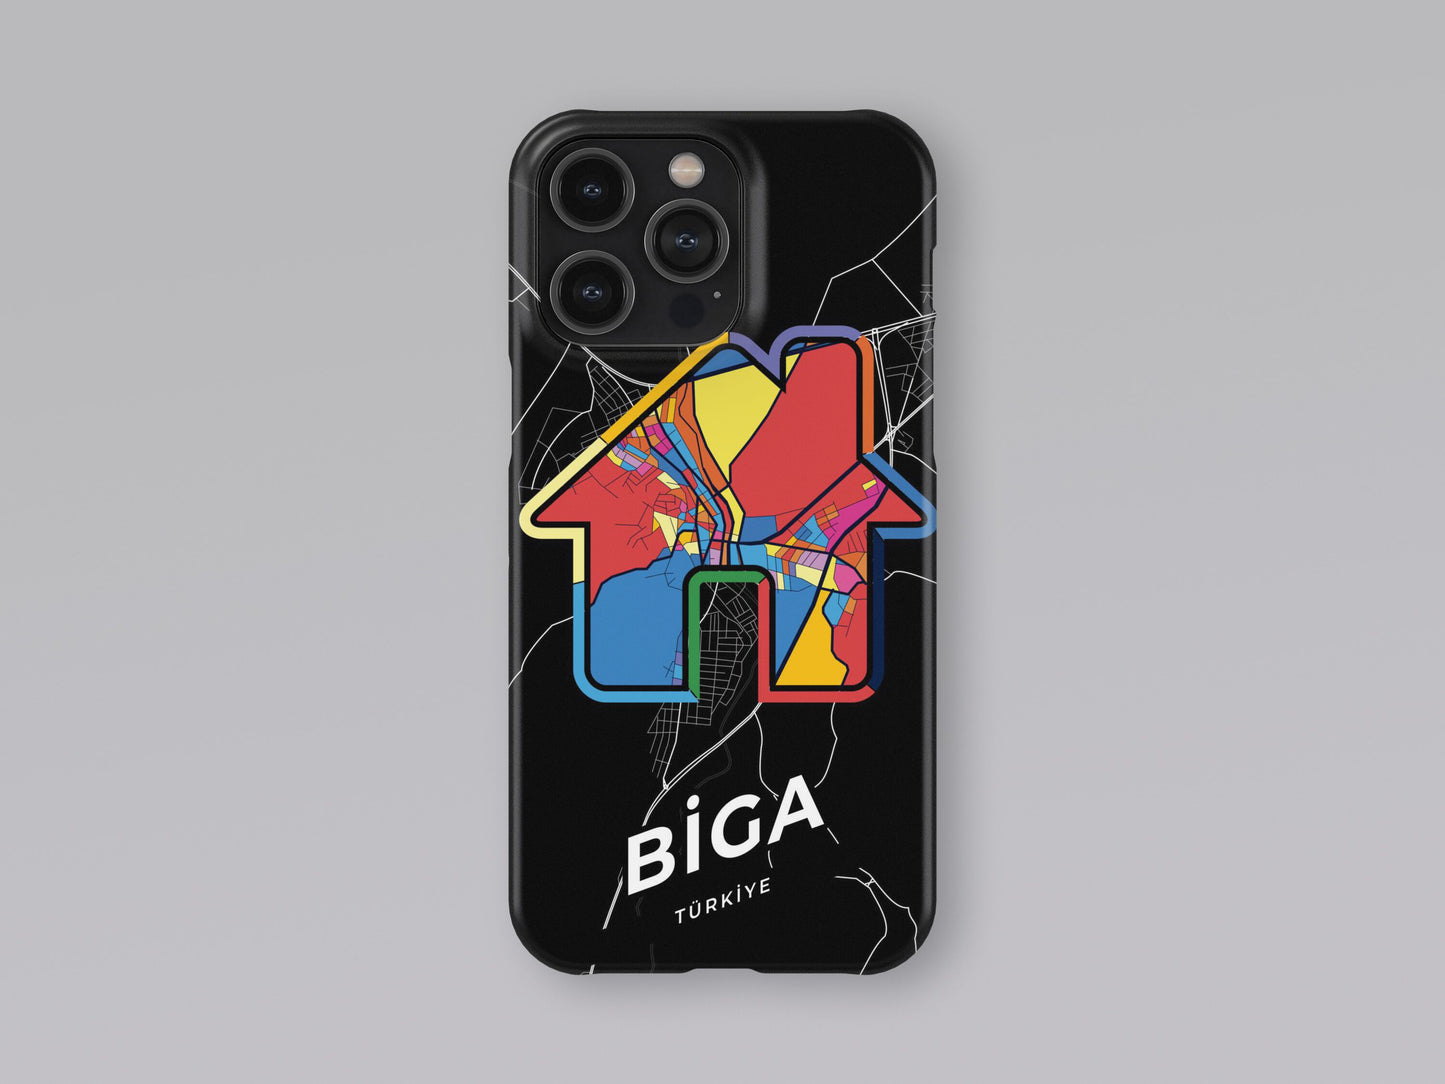 Biga Turkey slim phone case with colorful icon. Birthday, wedding or housewarming gift. Couple match cases. 3